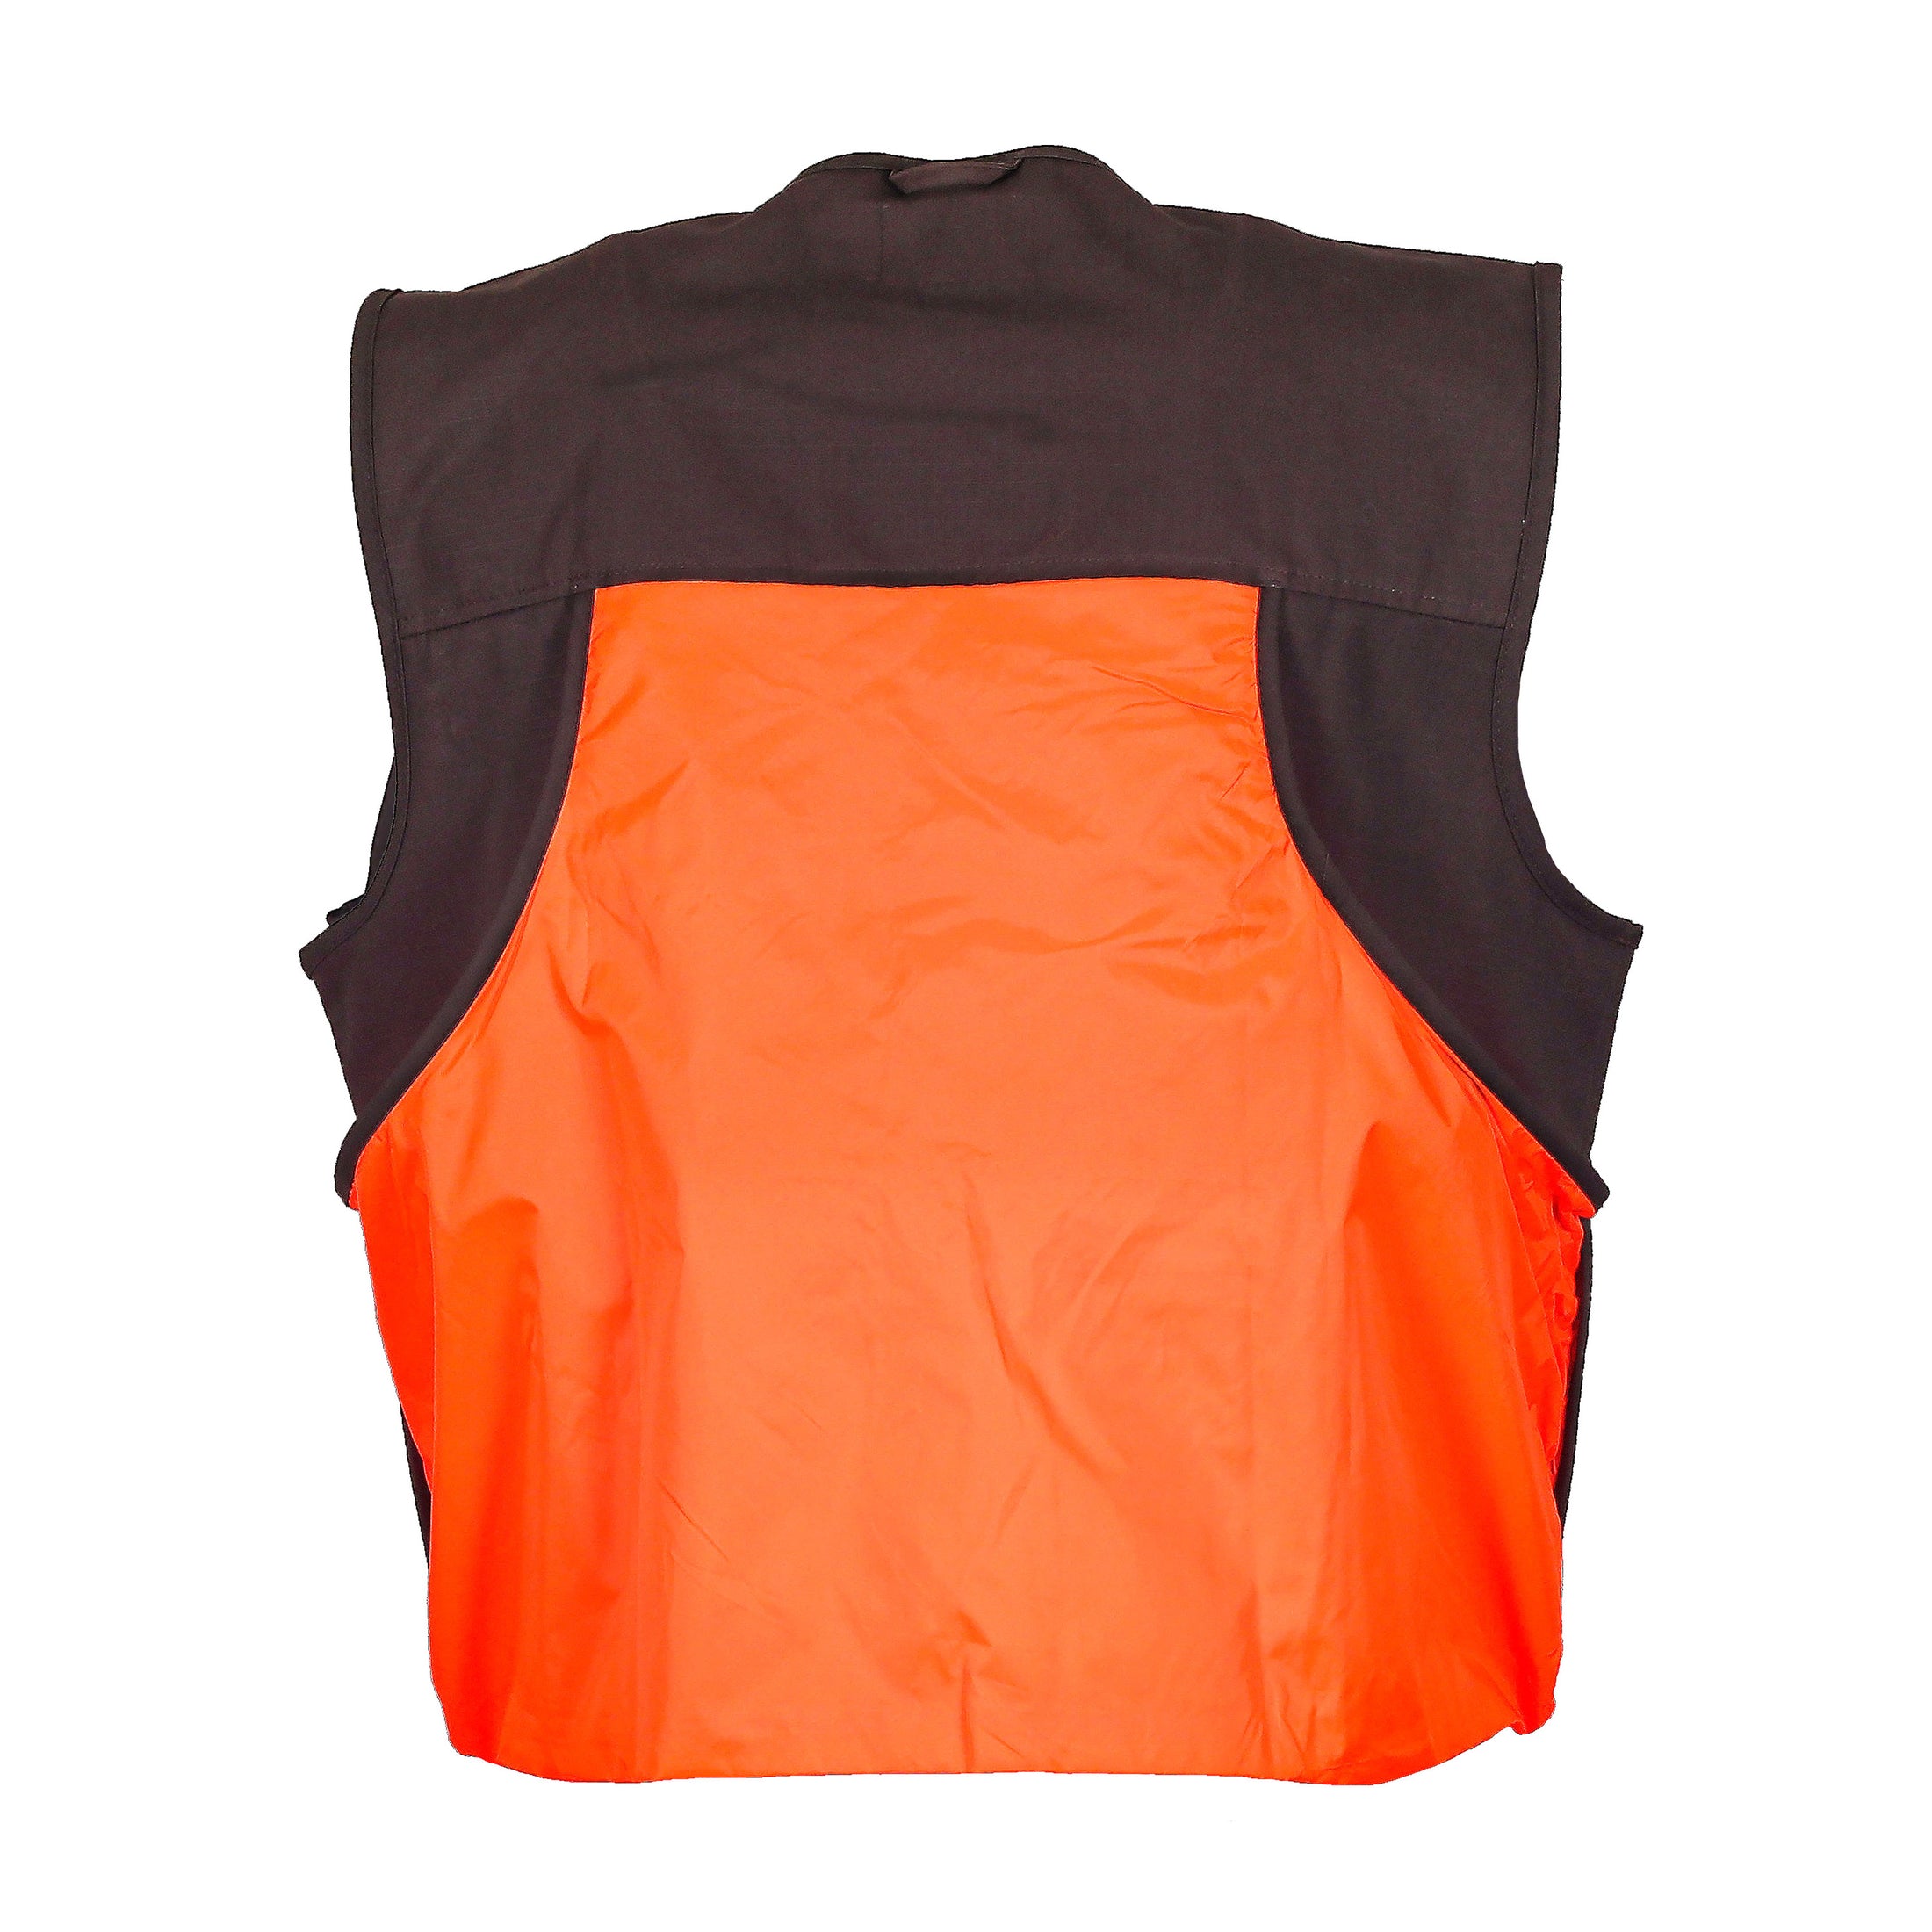 gamehide shelterbelt vest back view (dark brown/blaze orange)